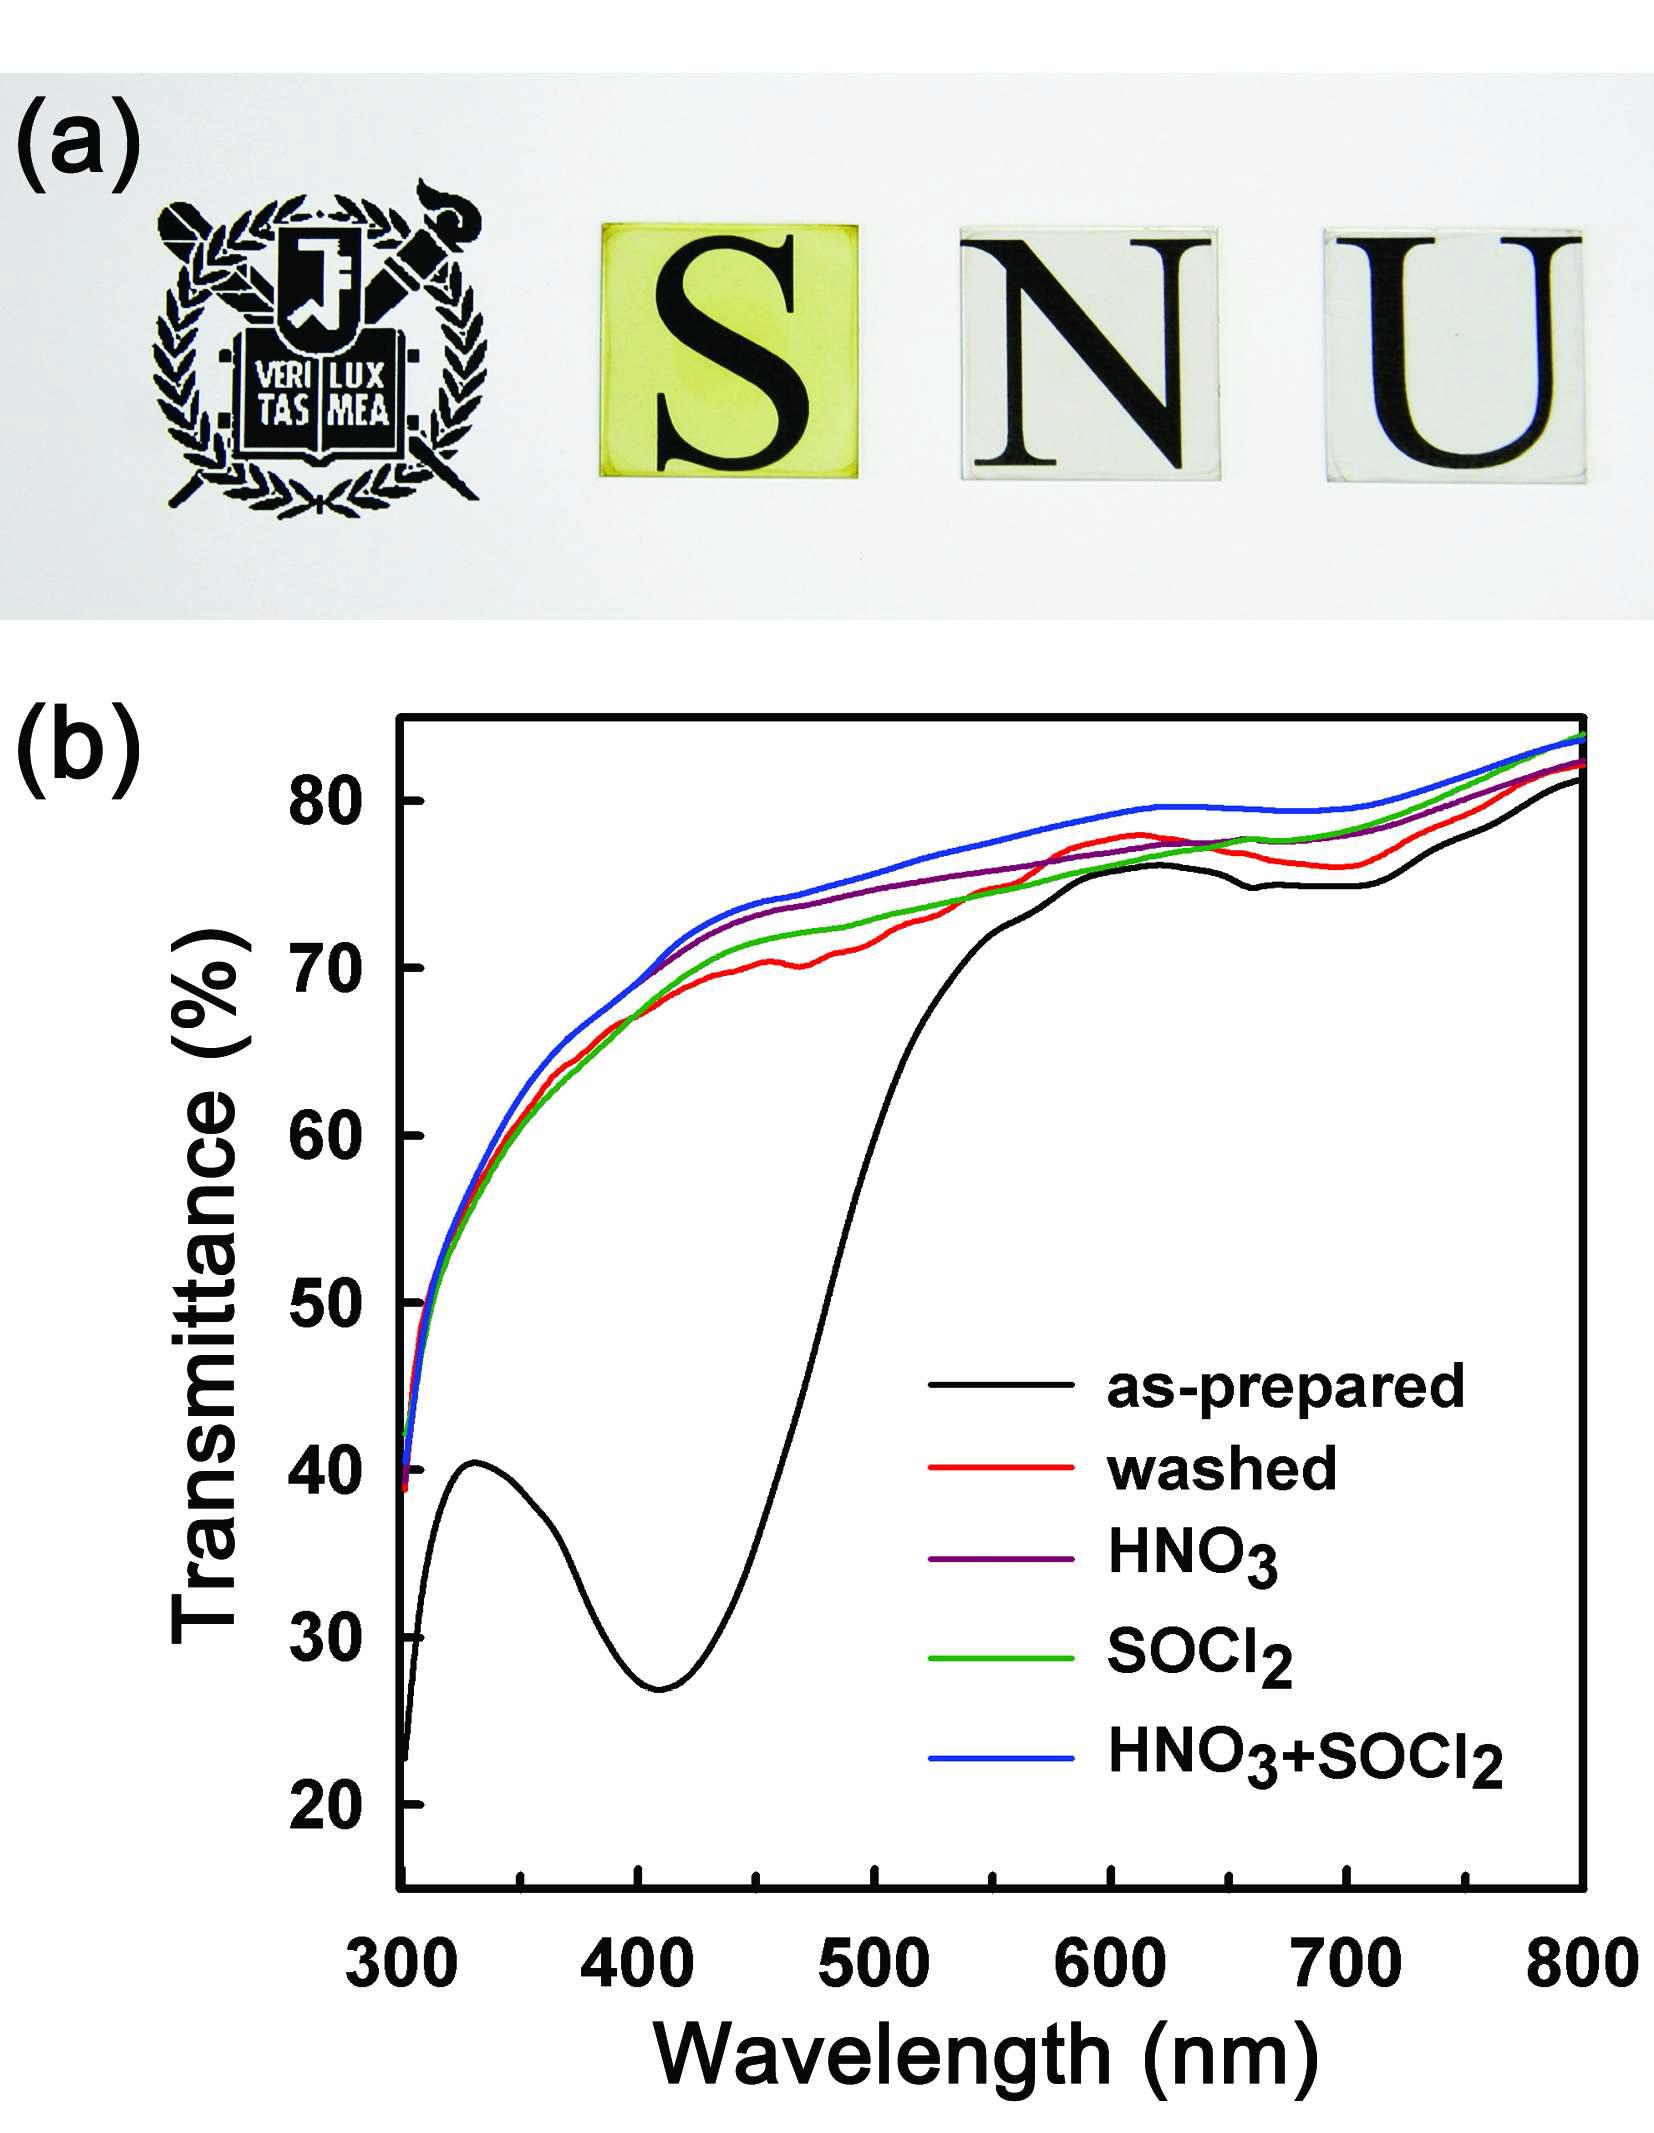 (a) Spin coating 후 박막(왼쪽), 용매로 분산제 제거 후 박막(가운데), HNO3와 SOCl2 처리 후 박막(오른쪽) (b) 각종 처리 후 SWCNT 박막의 광투과 스펙트럼.